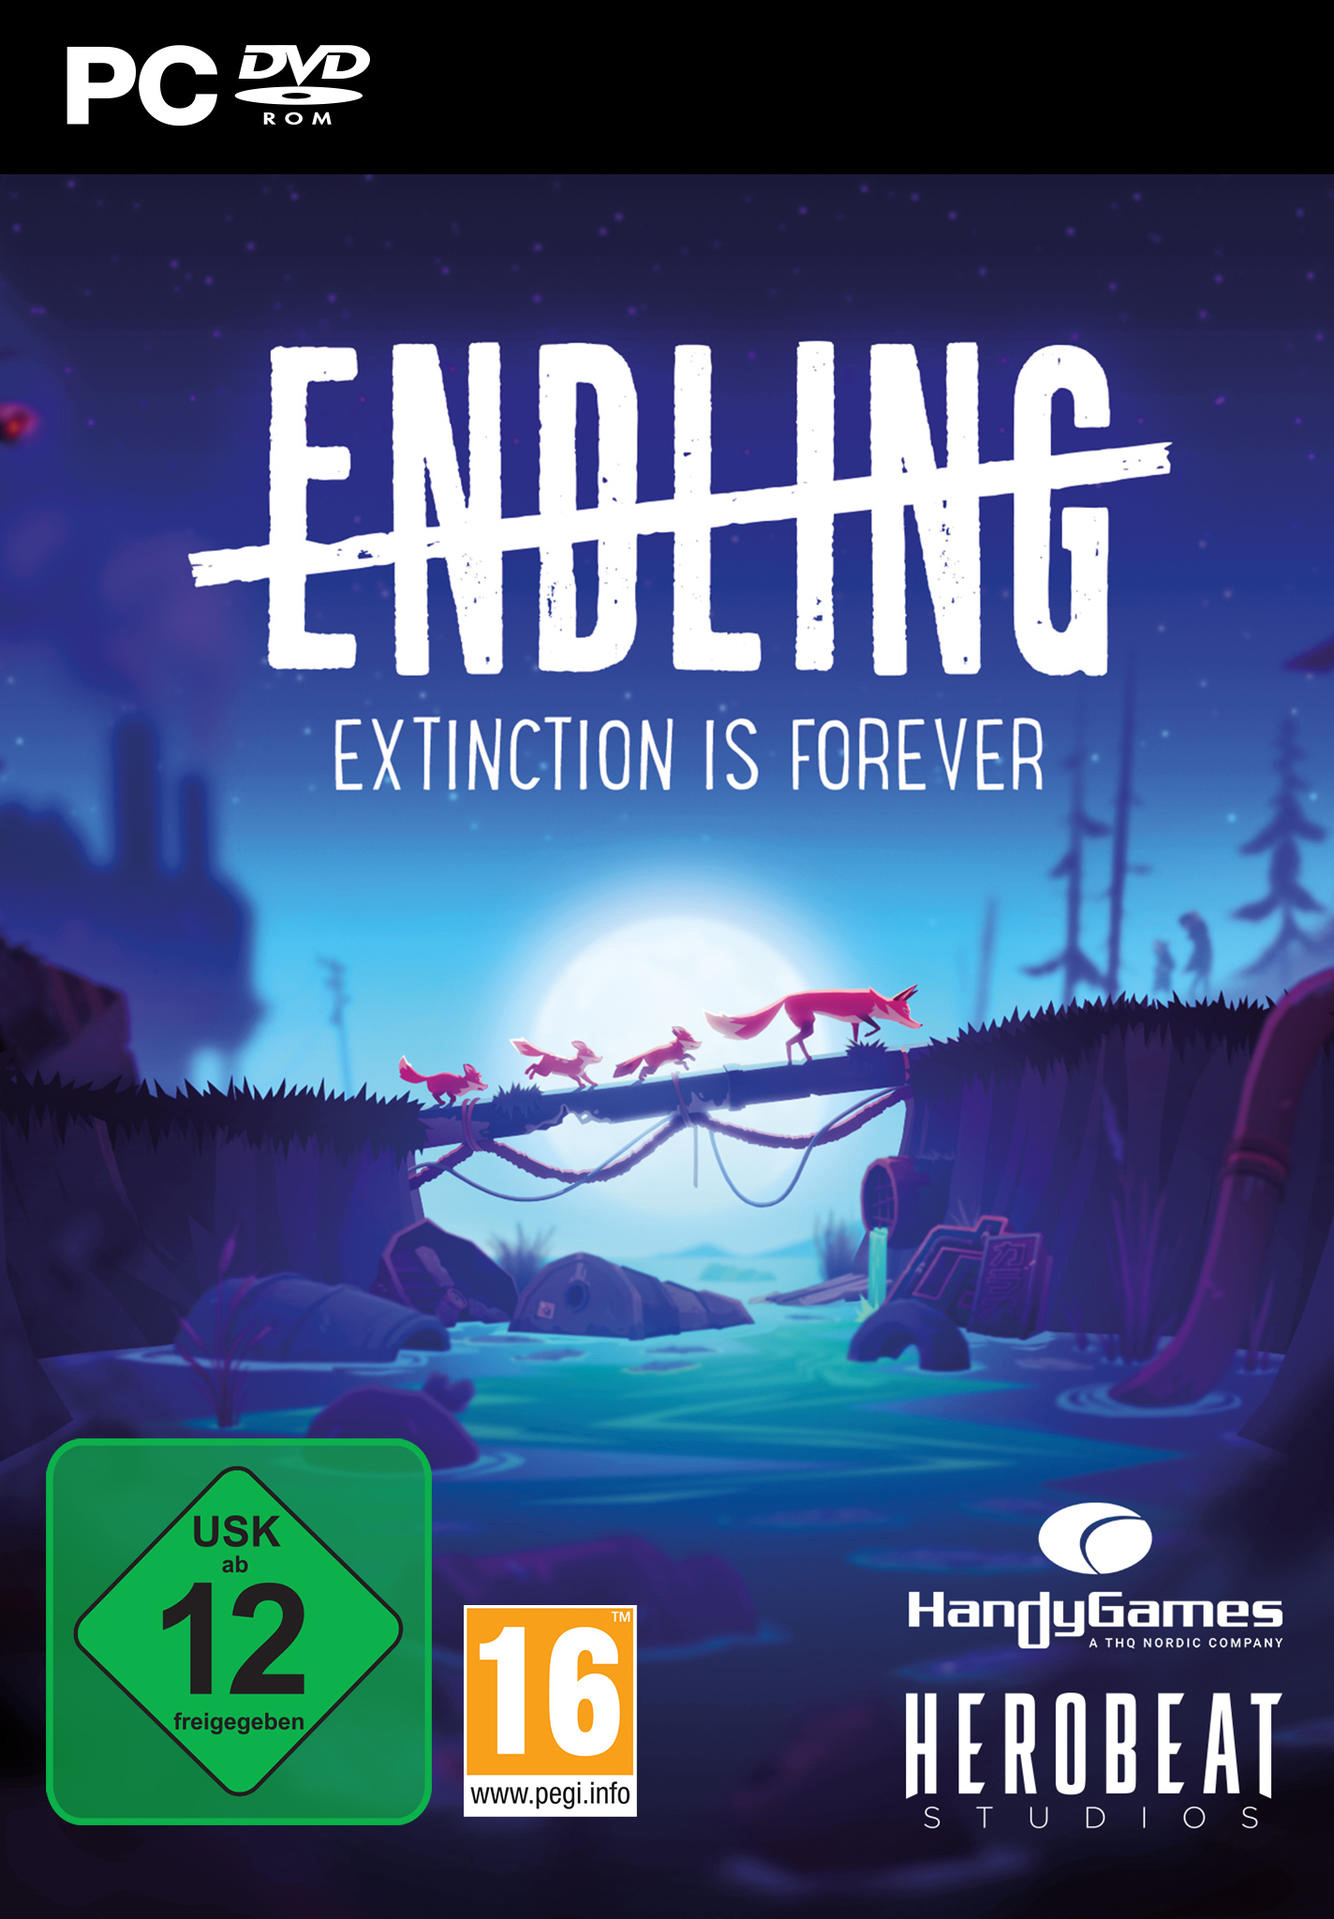 Forever - Endling is [PC] - Extinction